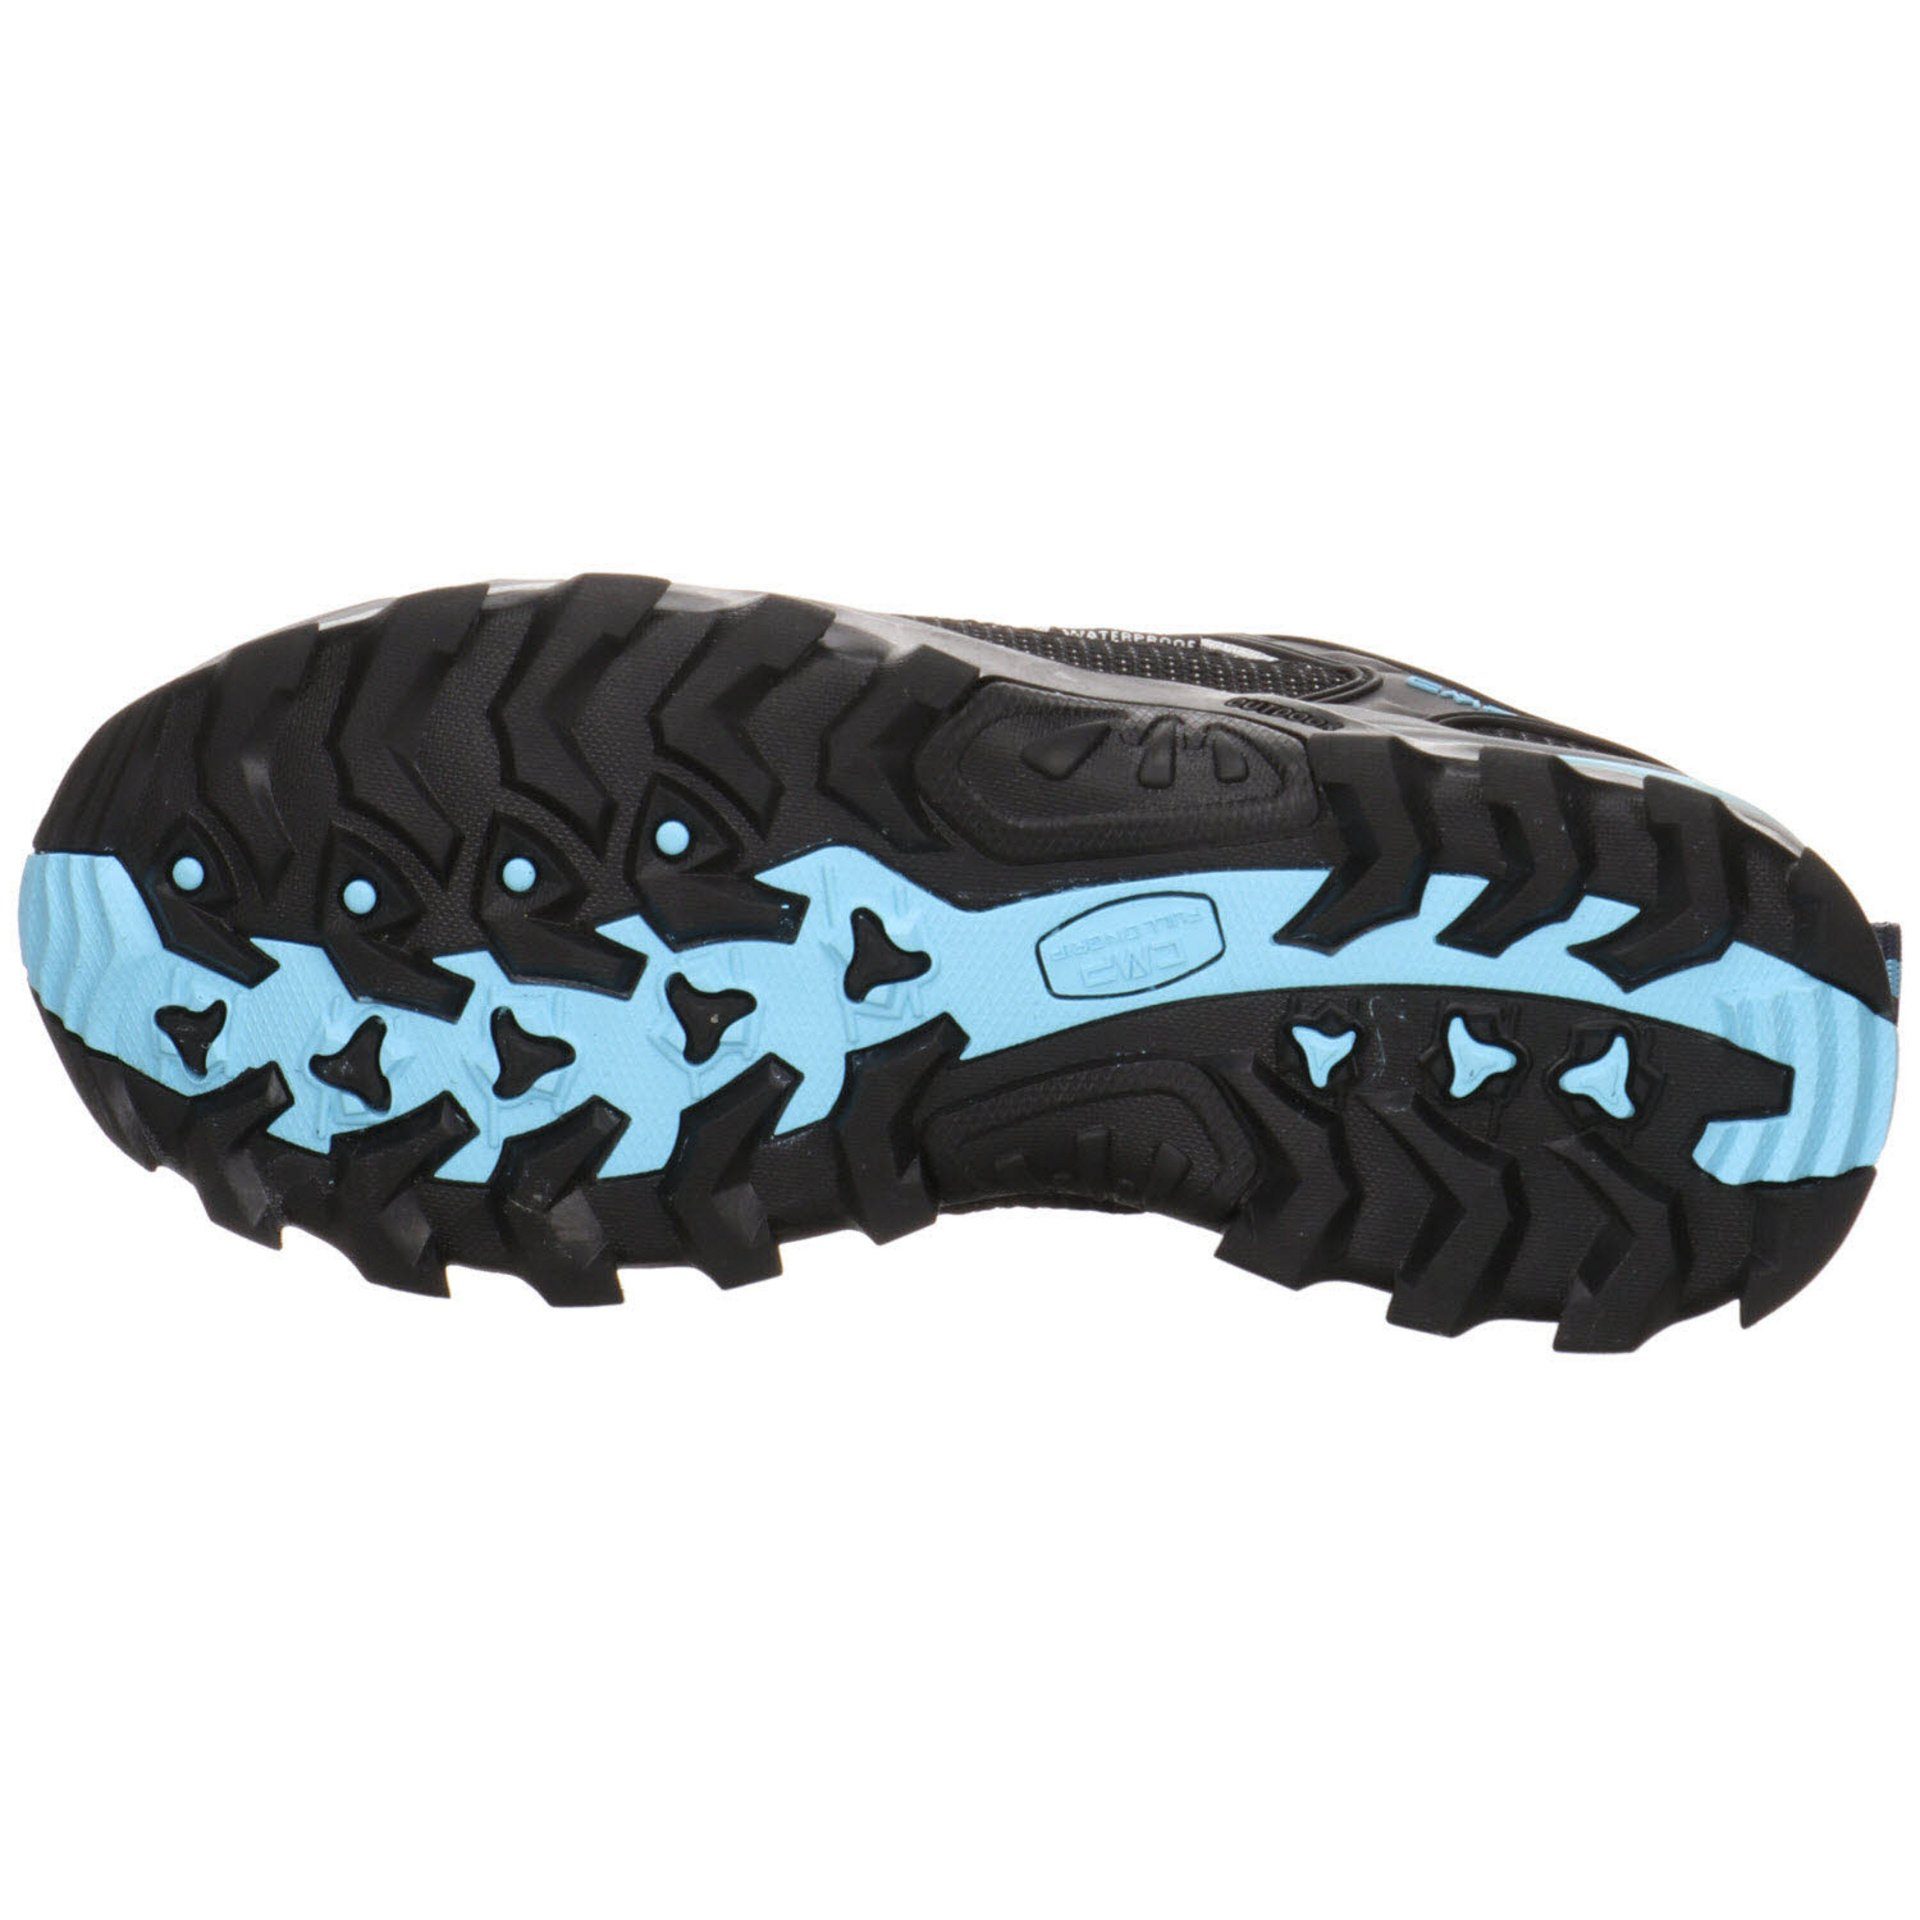 Synthetikkombination CMP Outdoorschuh Low kombi-schwarz Outdoor Schuhe Rigel blau Damen Outdoorschuh